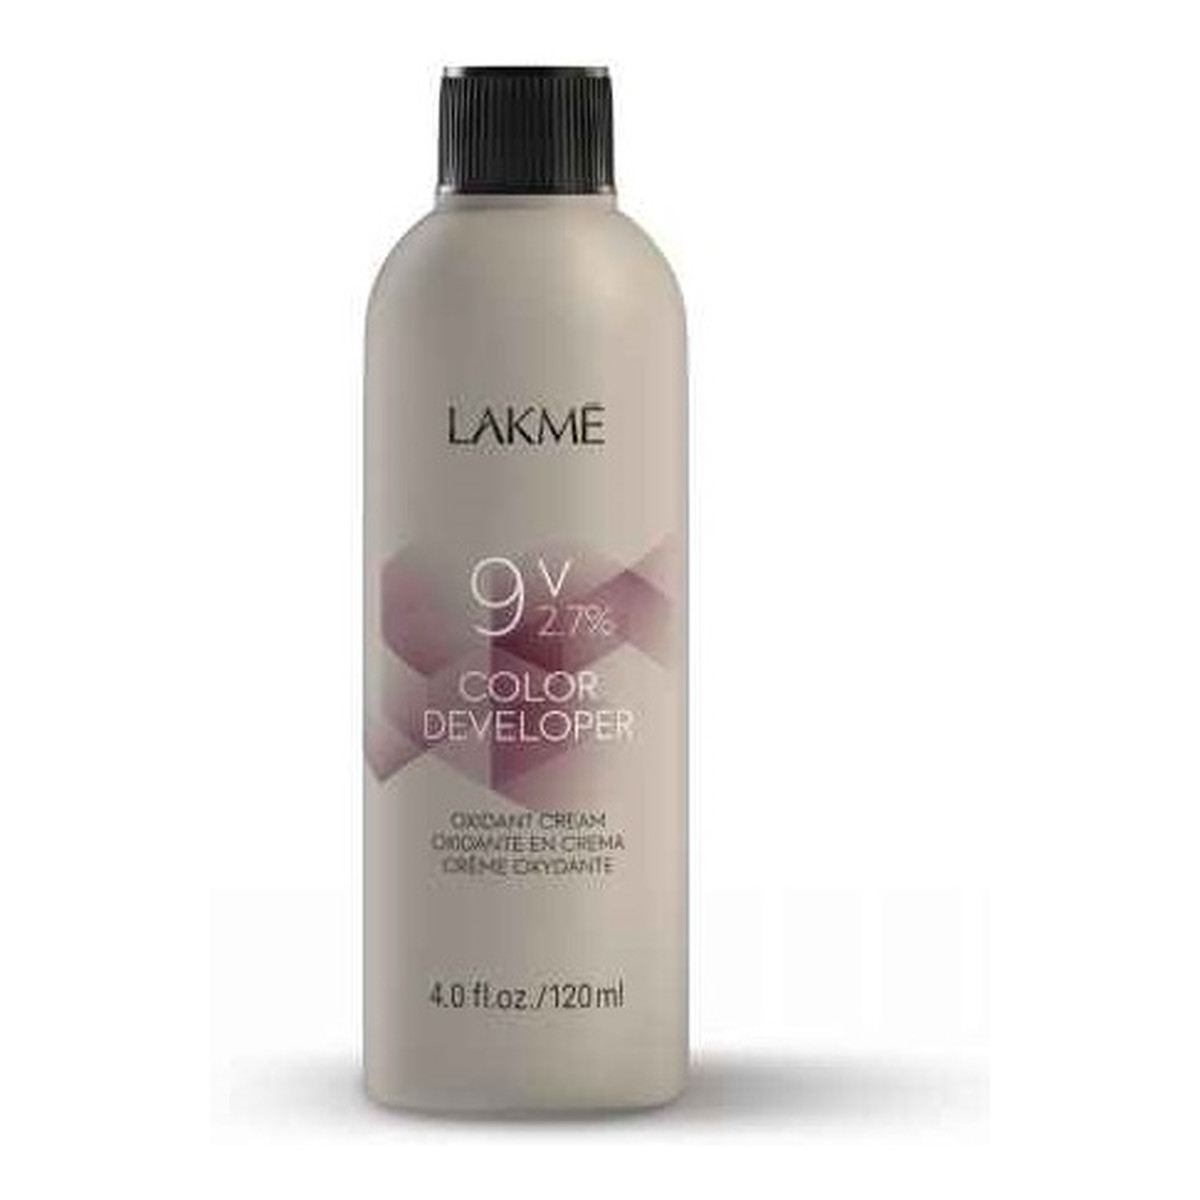 Lakme Color developer oxidant cream utleniacz do farby 9v 2.7% 120ml